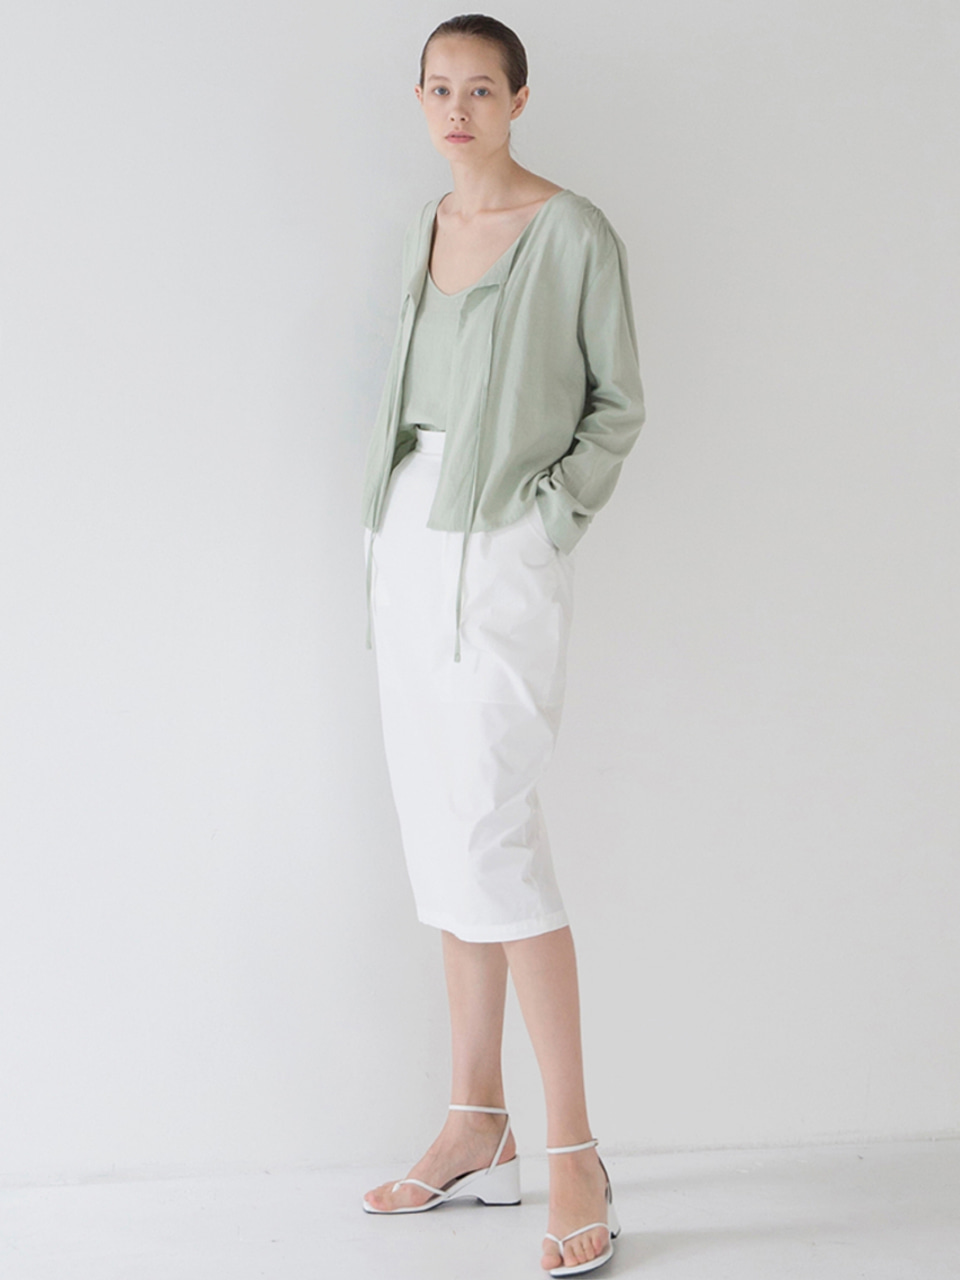 Linen Shirring Cardigan - Mint